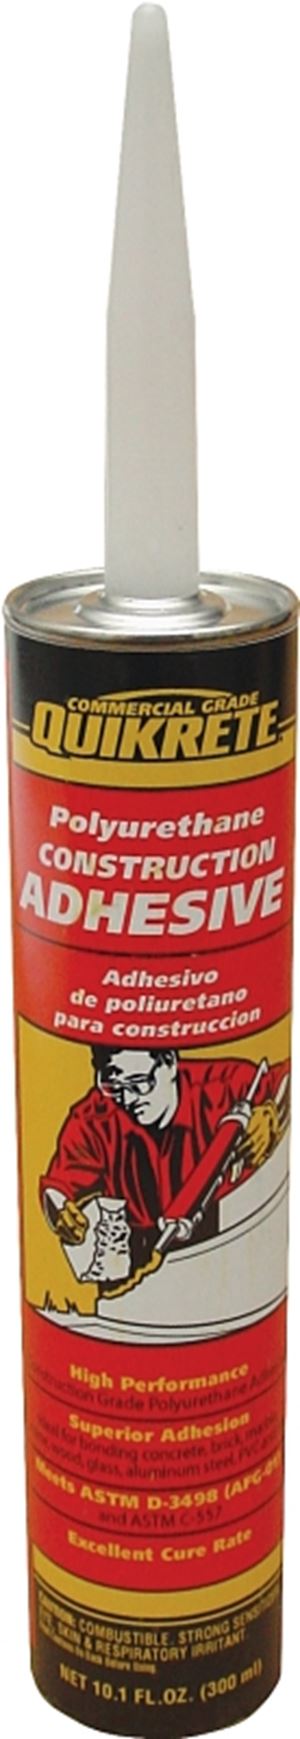 Quikrete 9902-10 Construction Adhesive, Gray, 10.1 oz Caulk Tube